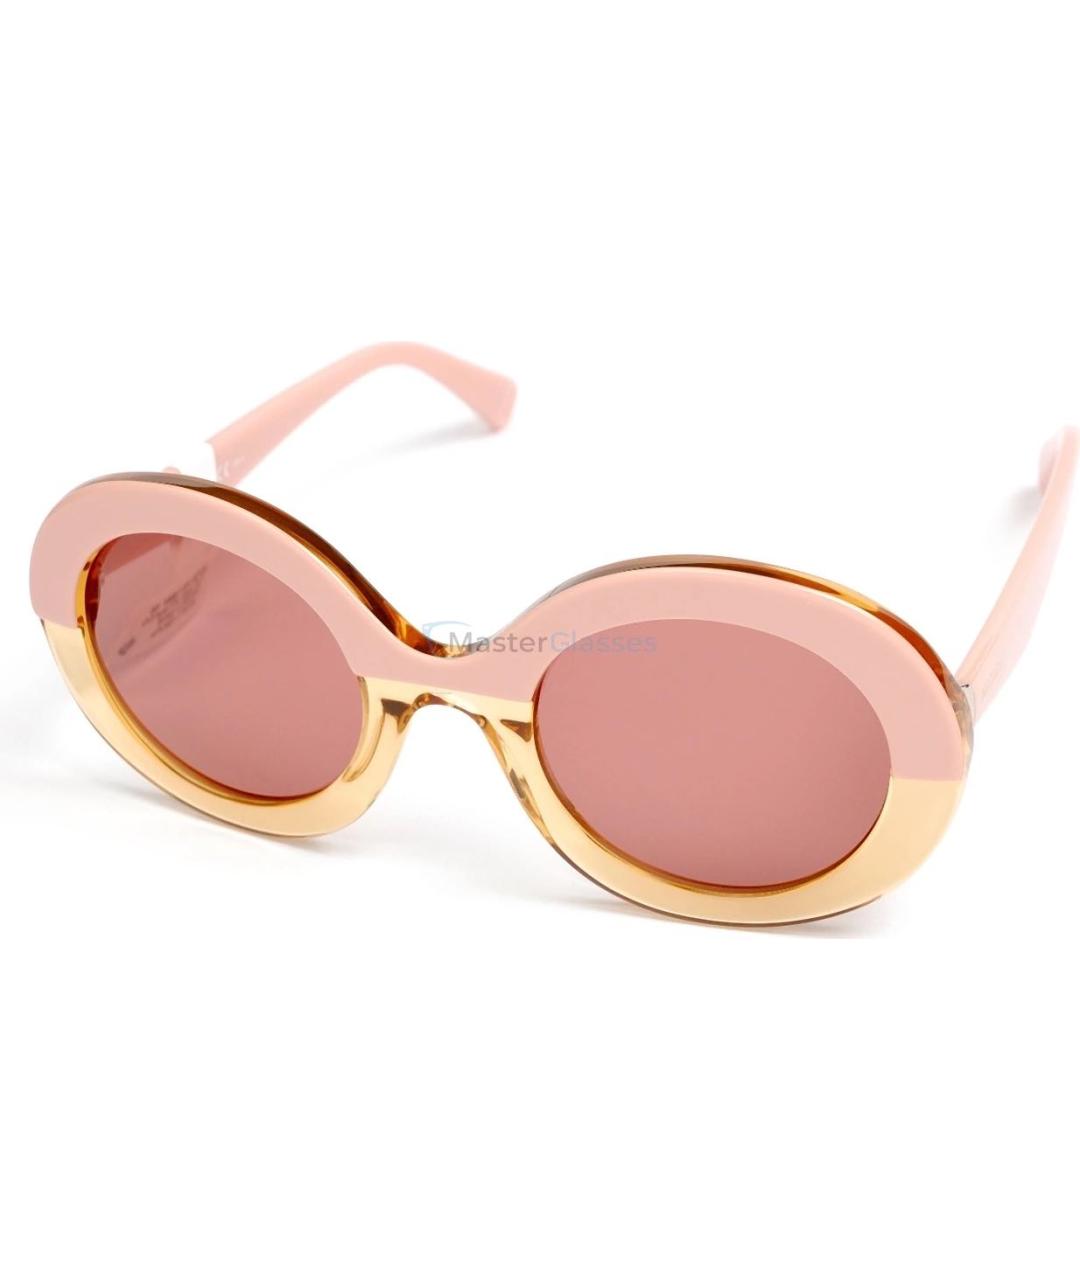 MAX&CO Розовые пластиковые солнцезащитные очки, фото 3